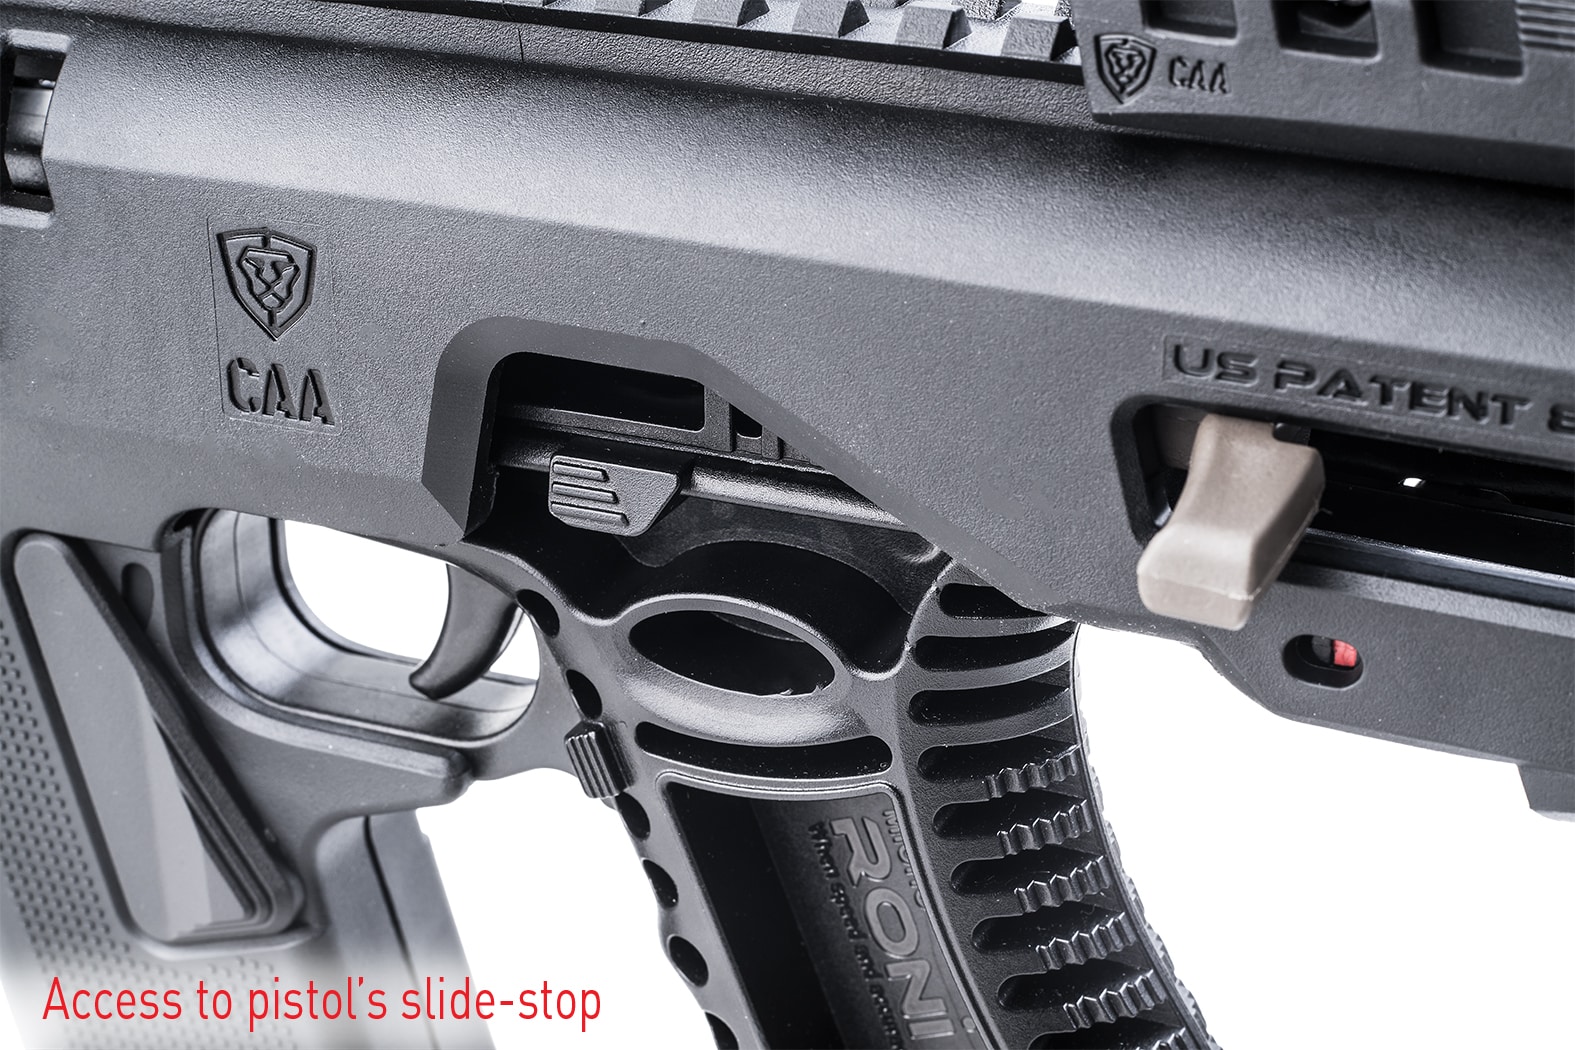 CAA Micro Conversion Kit for Glock 26/27 w/Gen 2 Stabilizer, Black